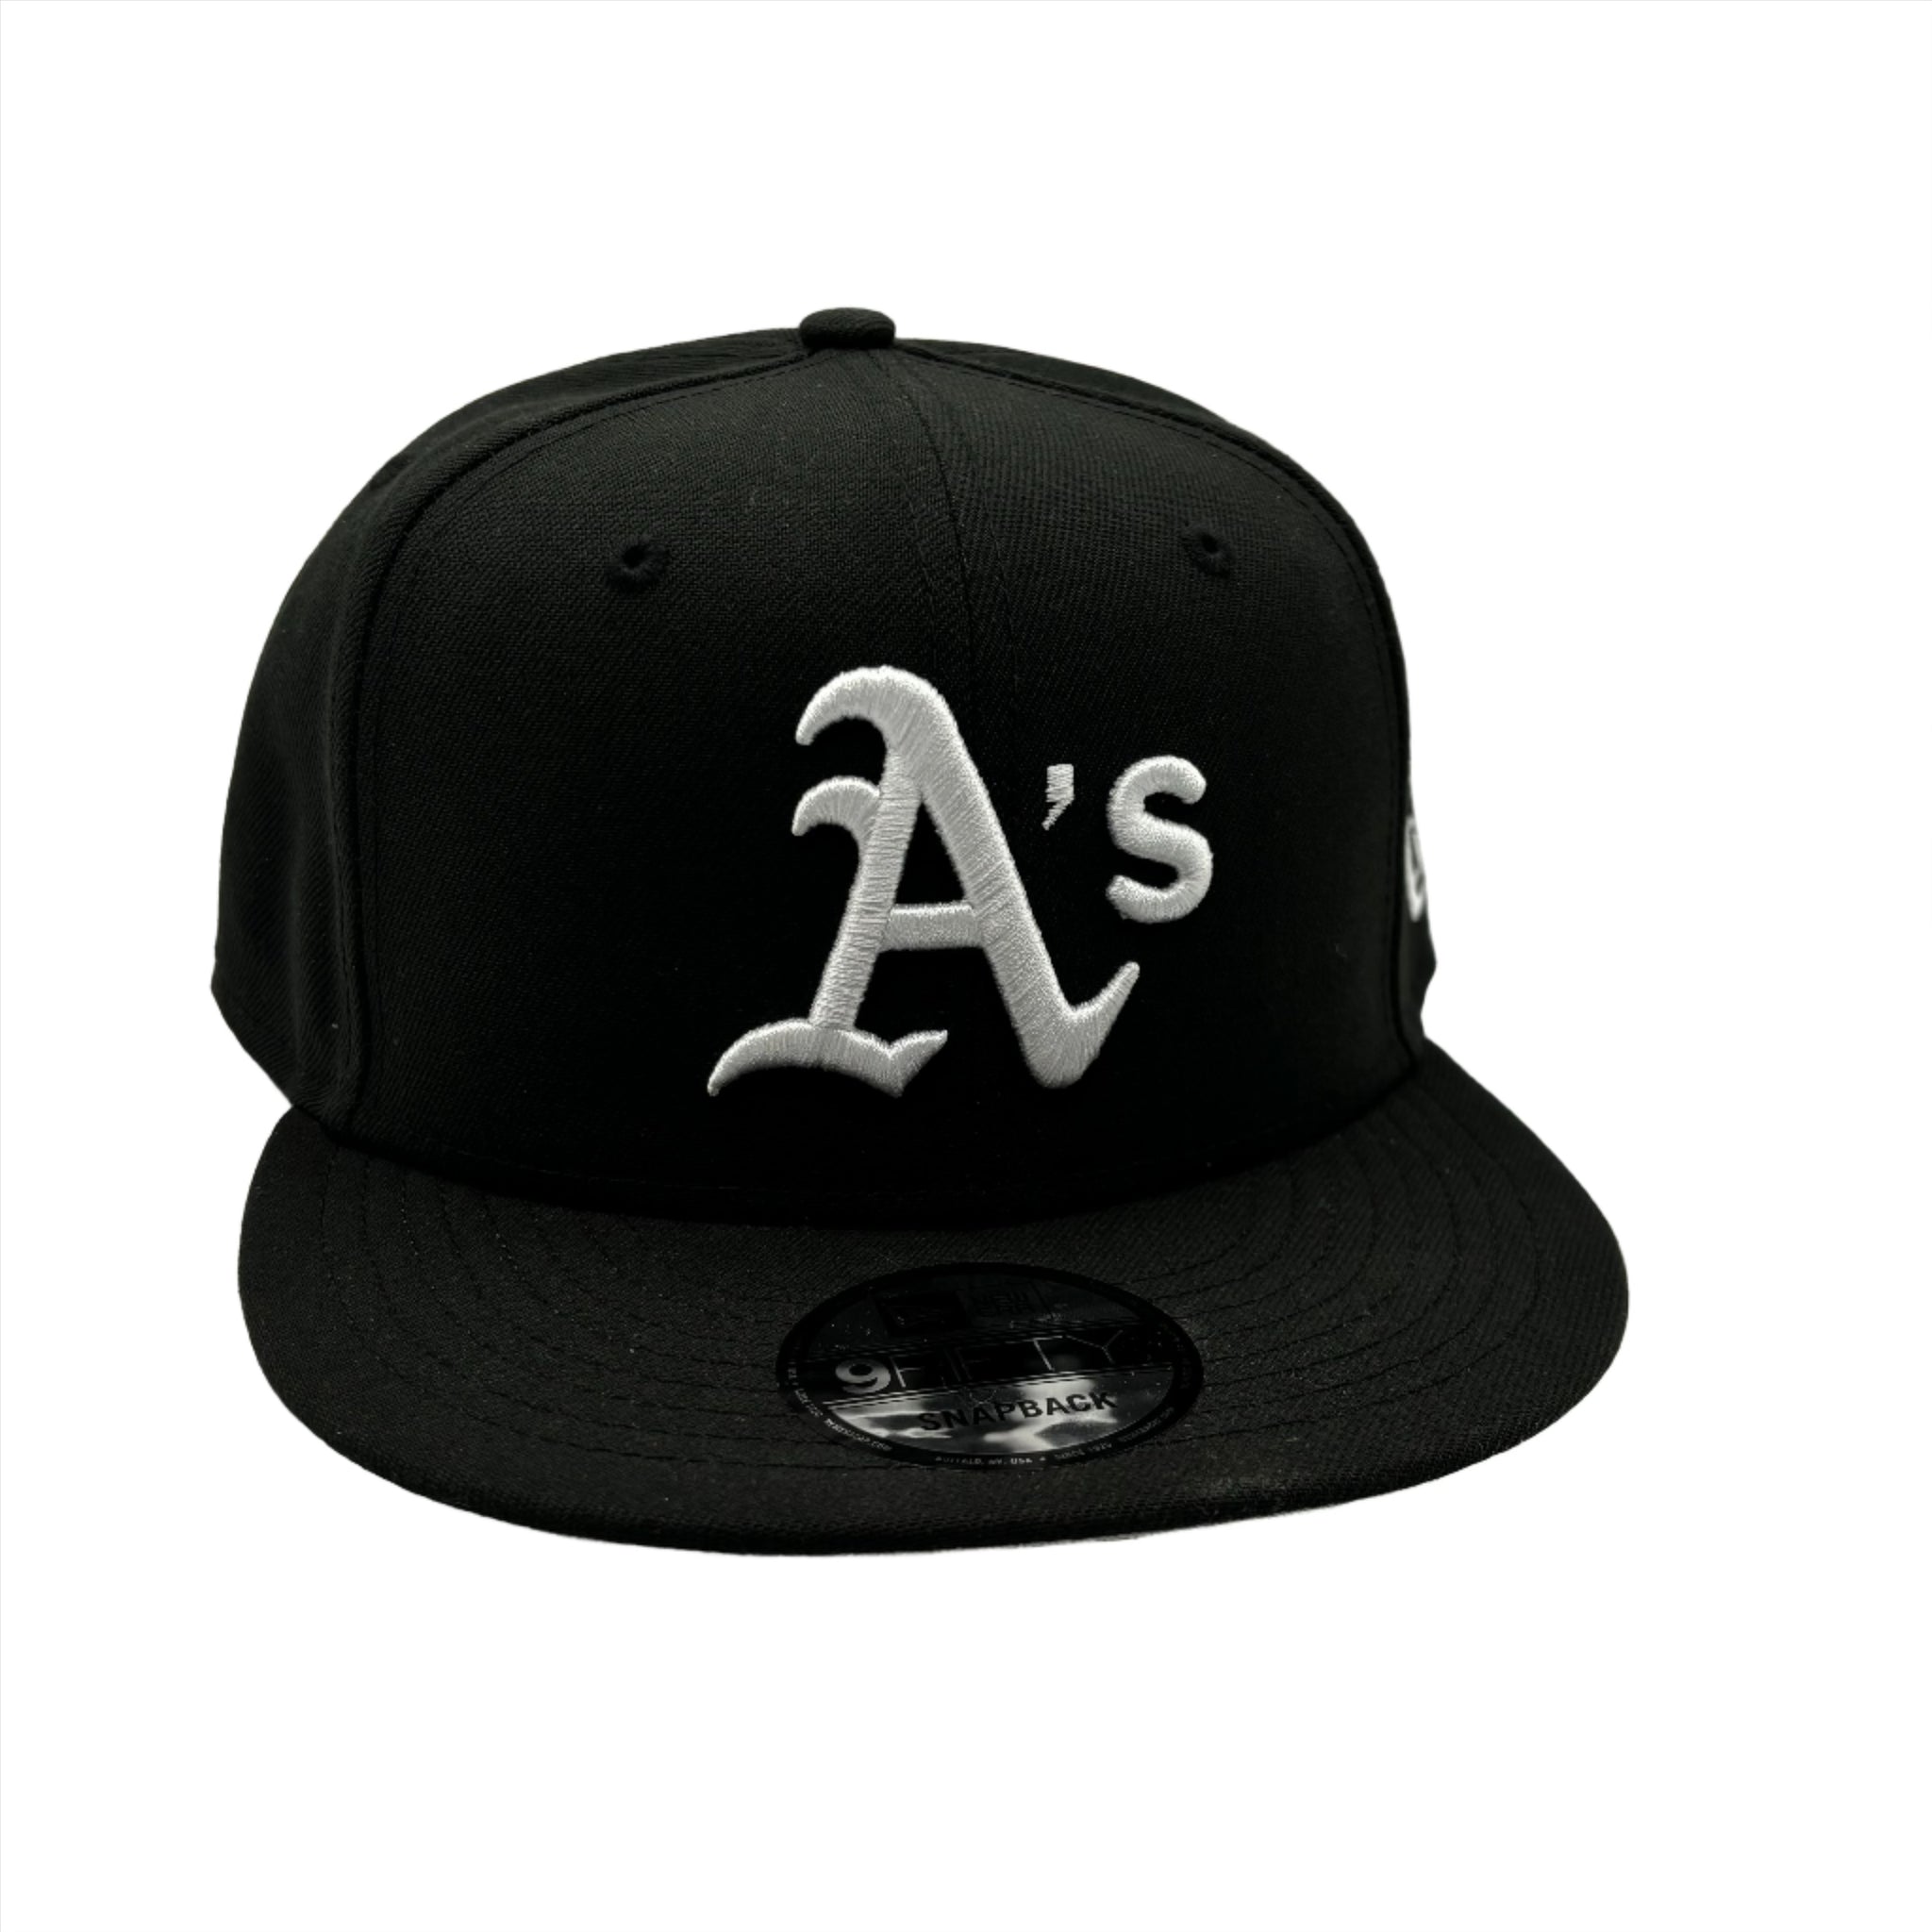 Athletics New Era 9FIFTY Chain Stitch Black Snapback Hat